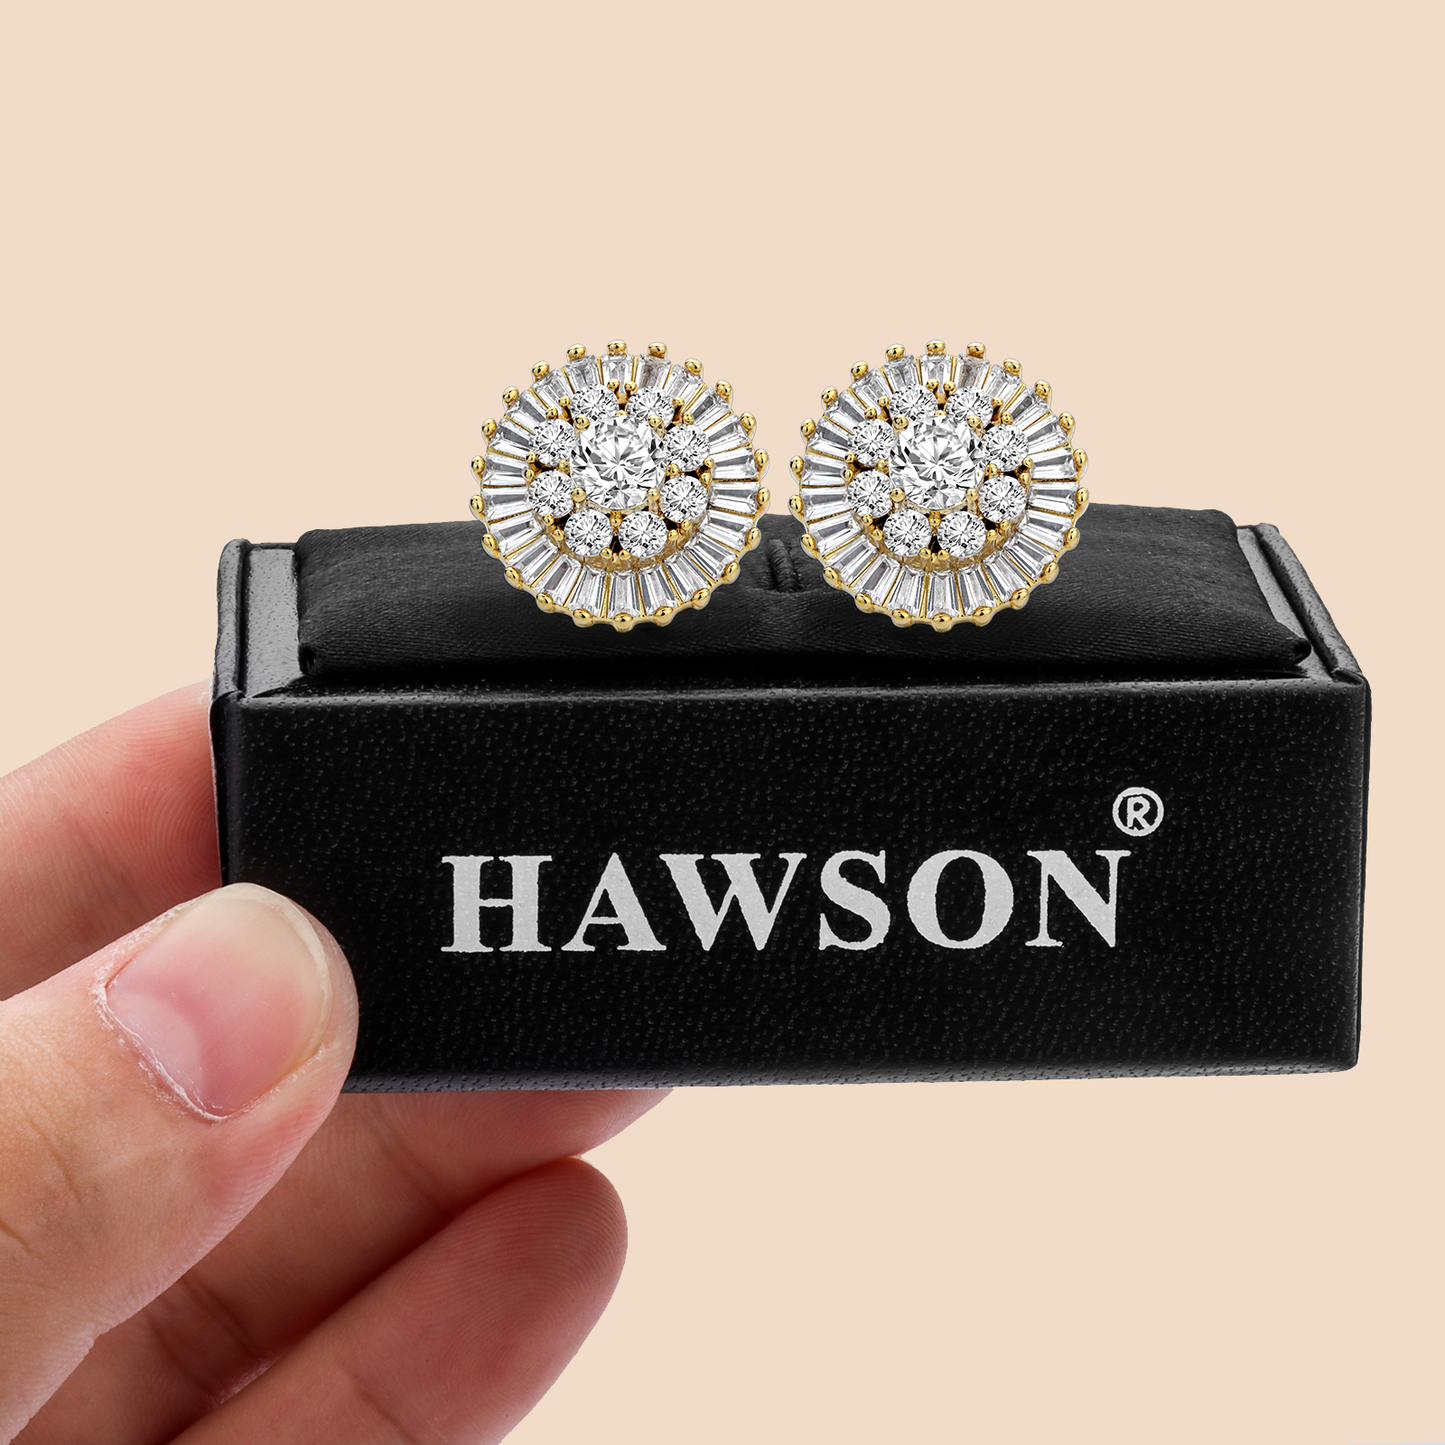 HAWSON 18K Gold Tone Cubic Zirconia Cufflinks for Men.